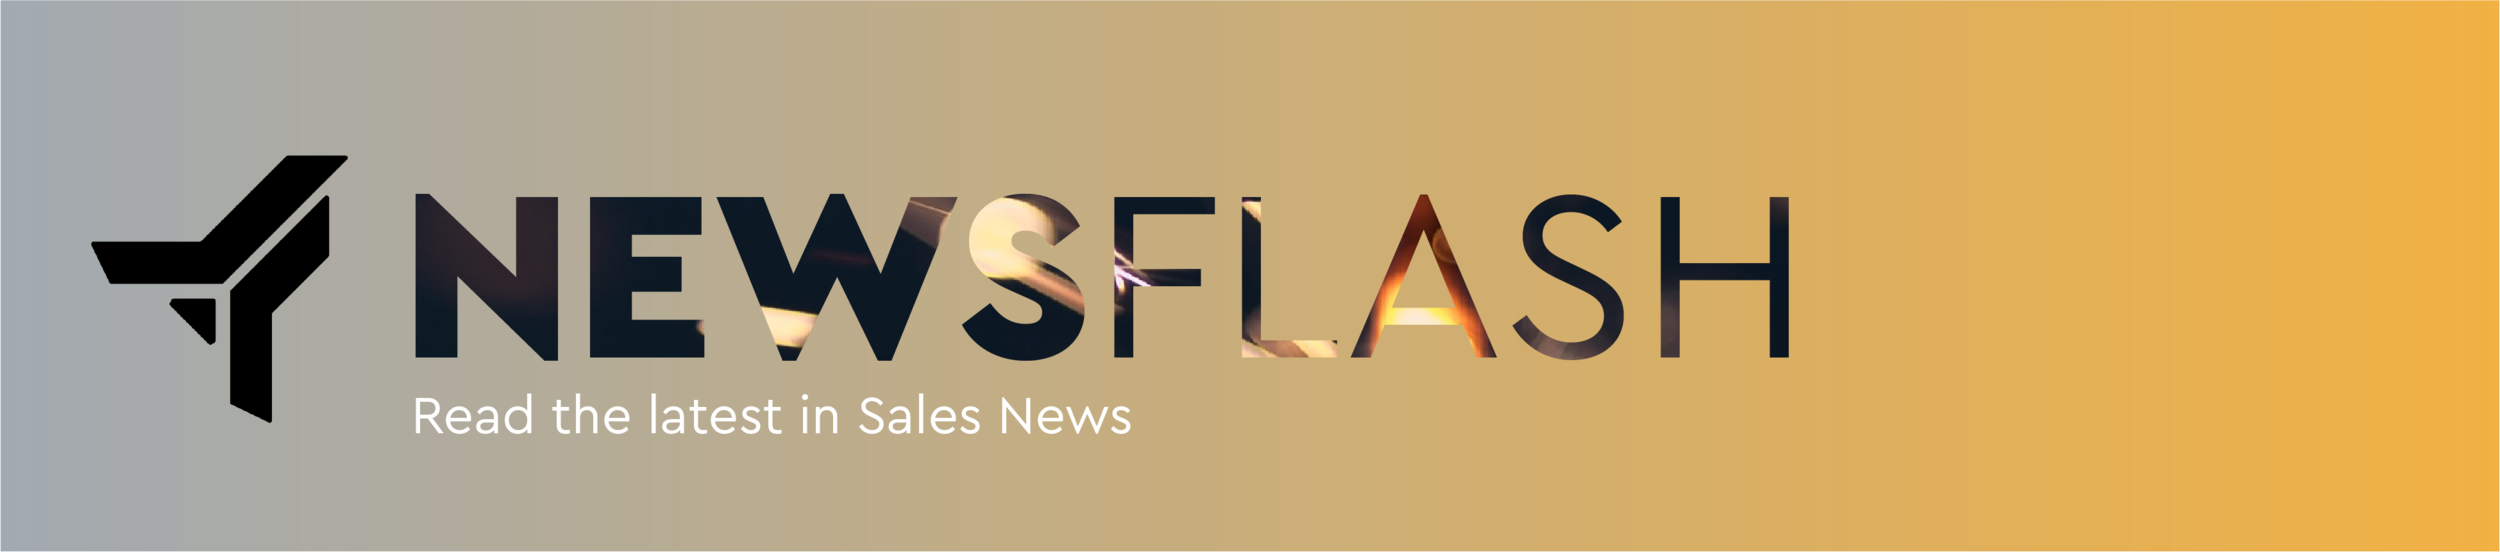 newsflash-banner.png